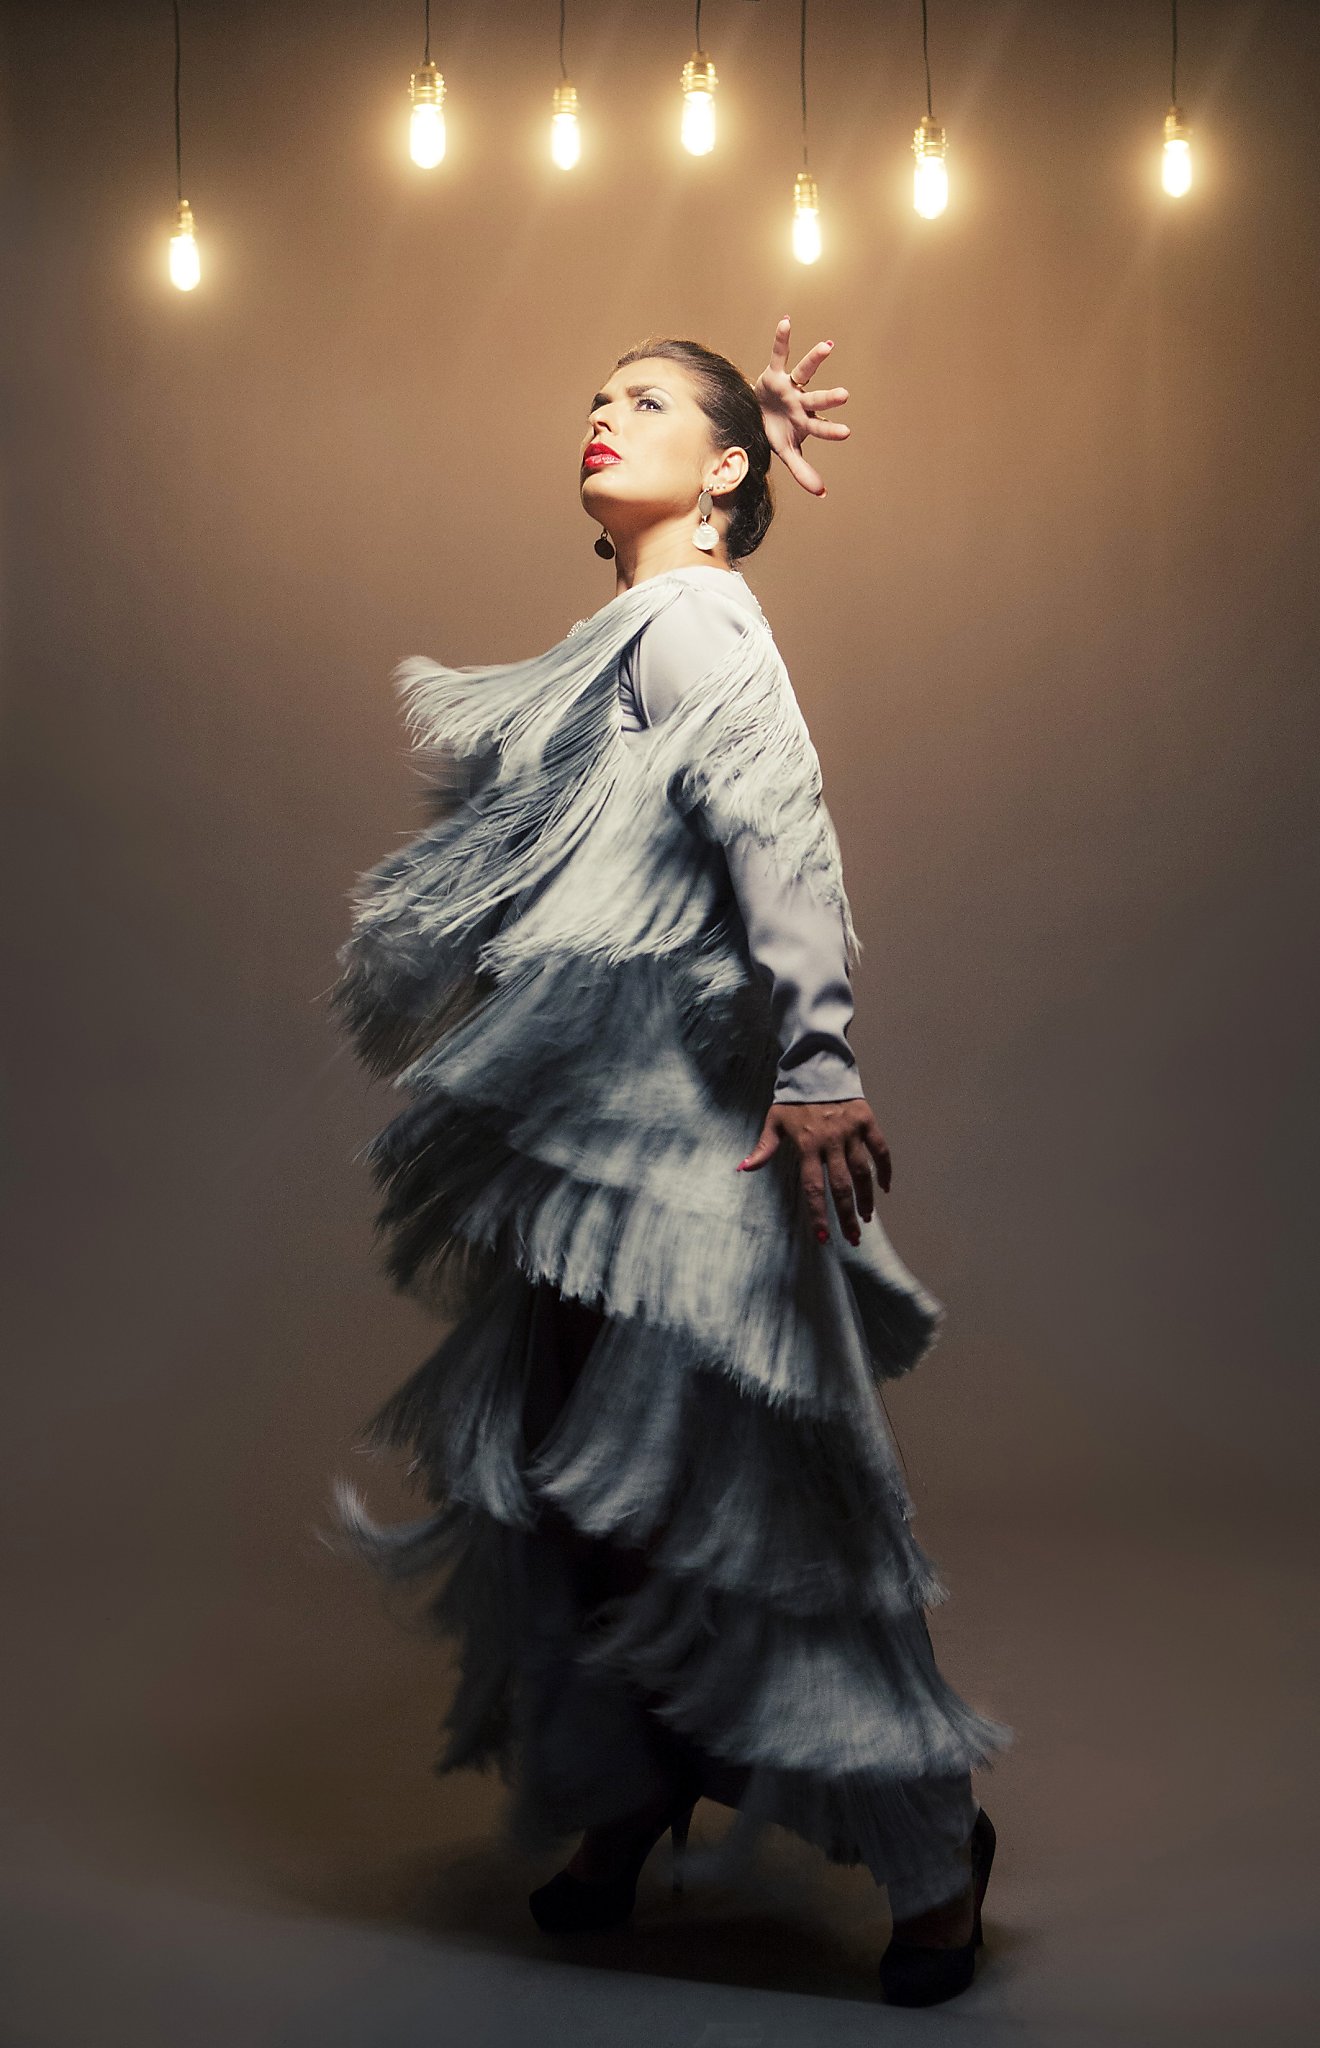 Theatre Flamenco celebrates 50 years of dance